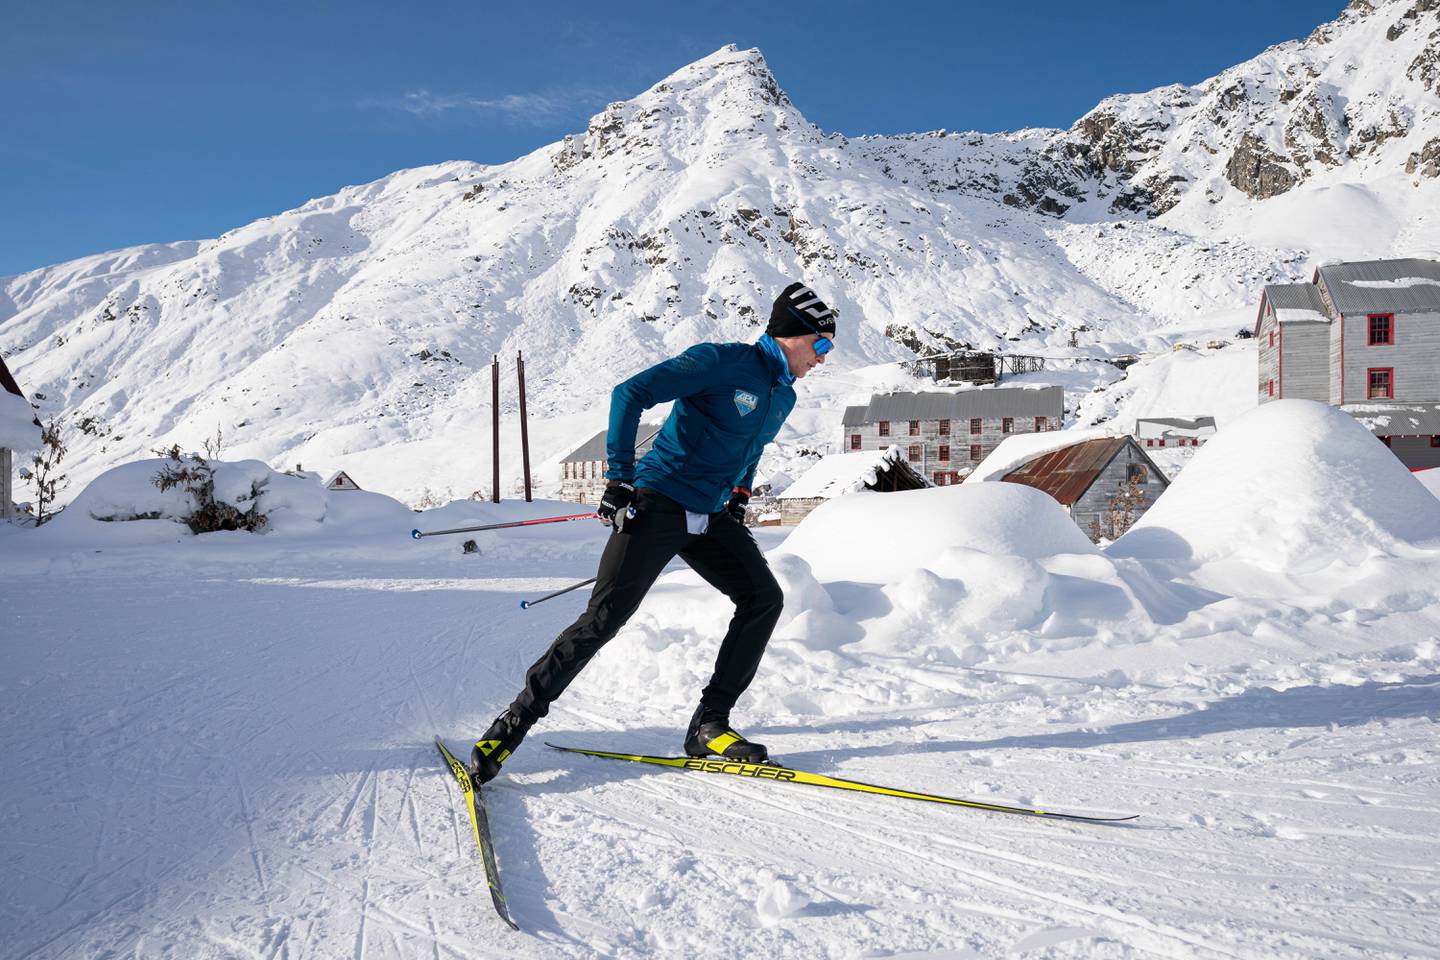 Chip Schoff, hatcher pass, skiing, snow, winter